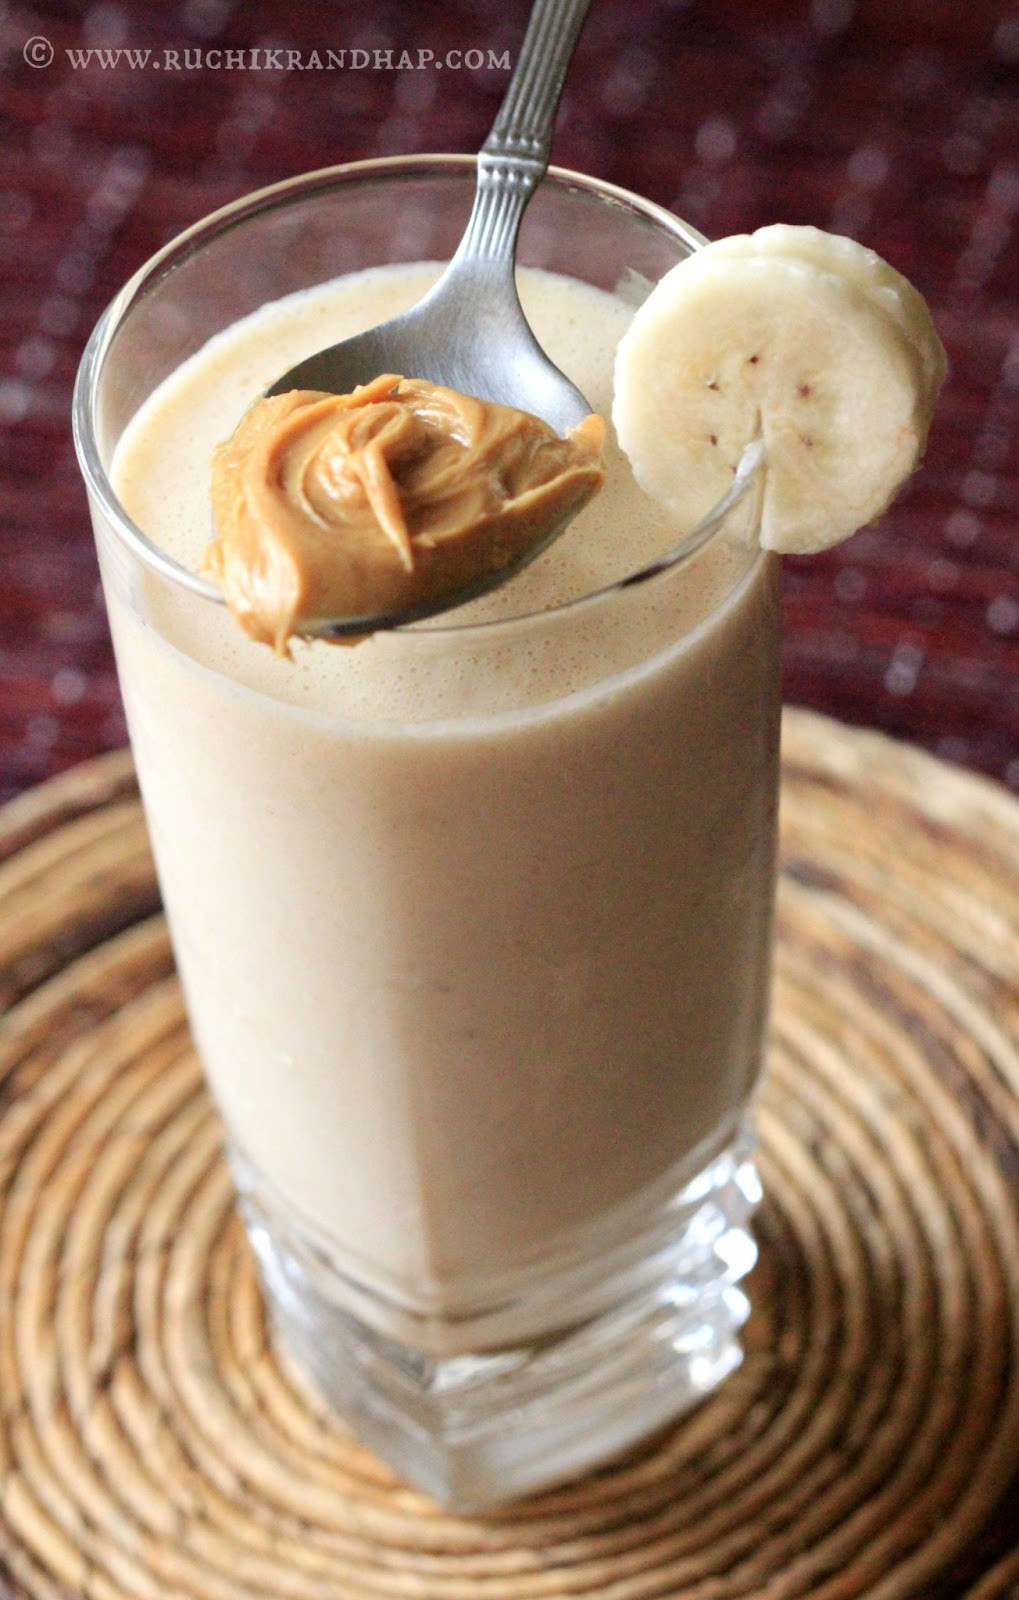 Peanut Butter Smoothies
 Peanut Butter & Banana Smoothie Ruchik Randhap